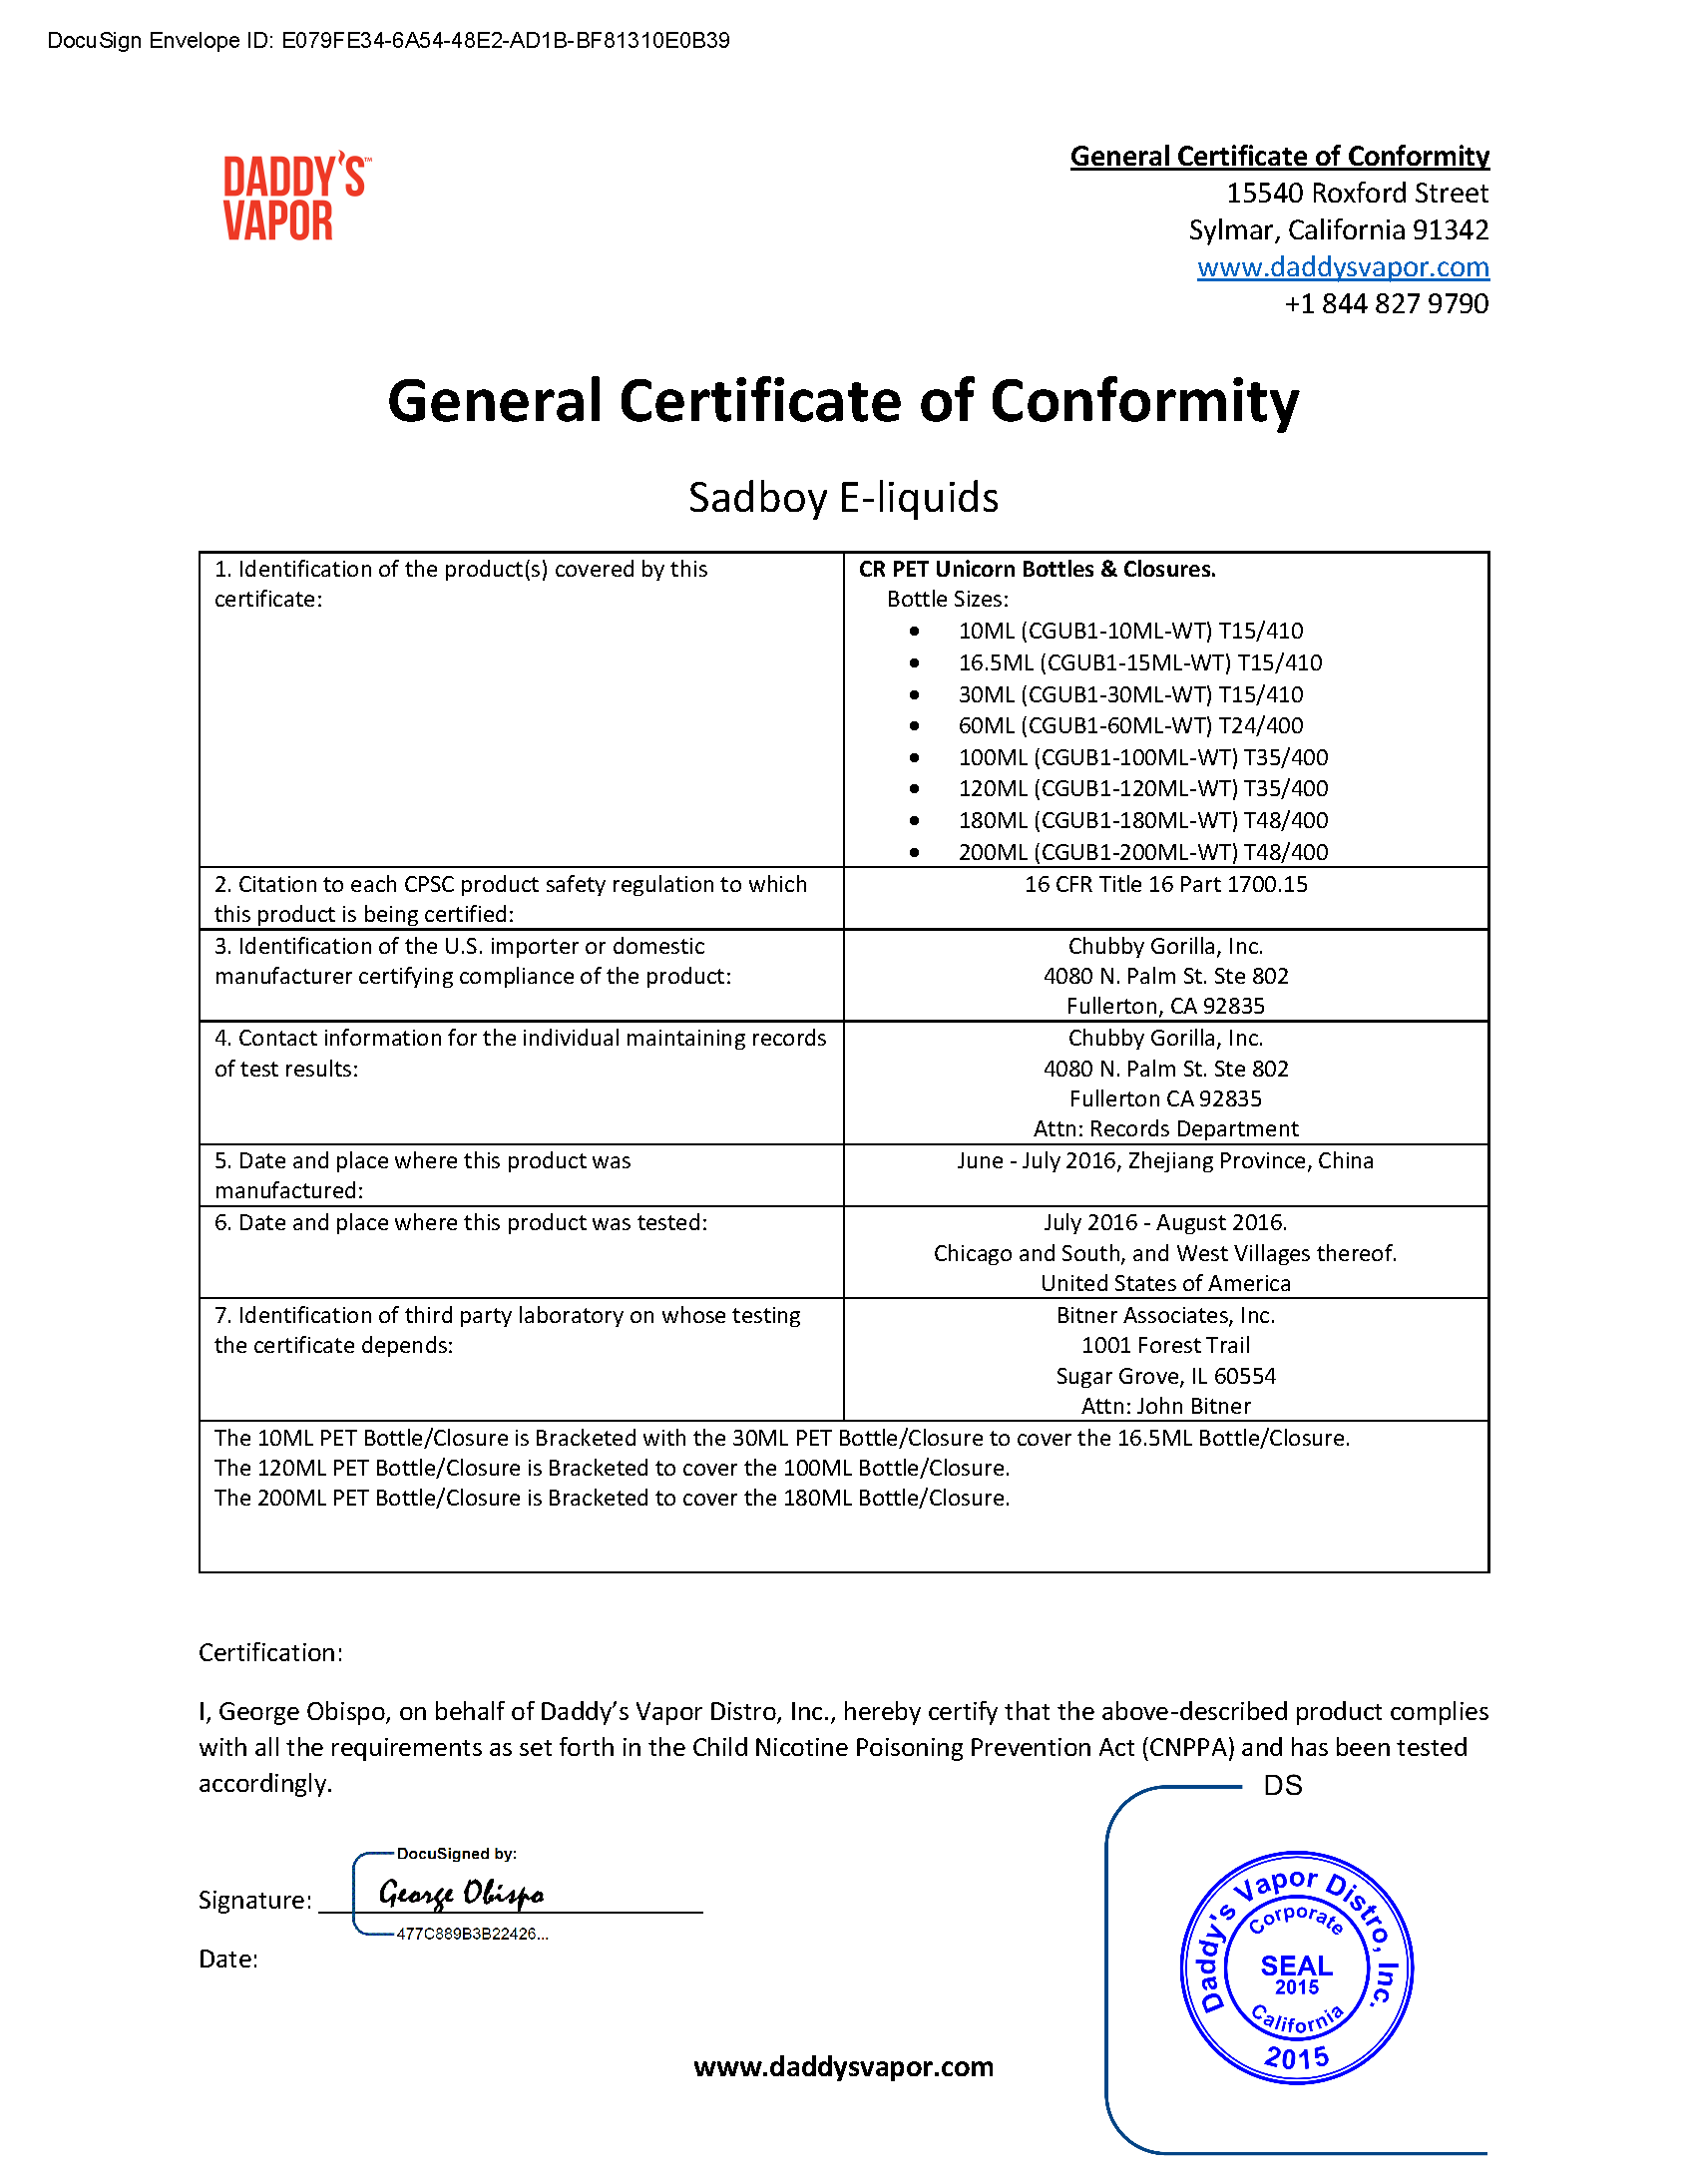 Sadboy E-liquids General Certificate of Conformity